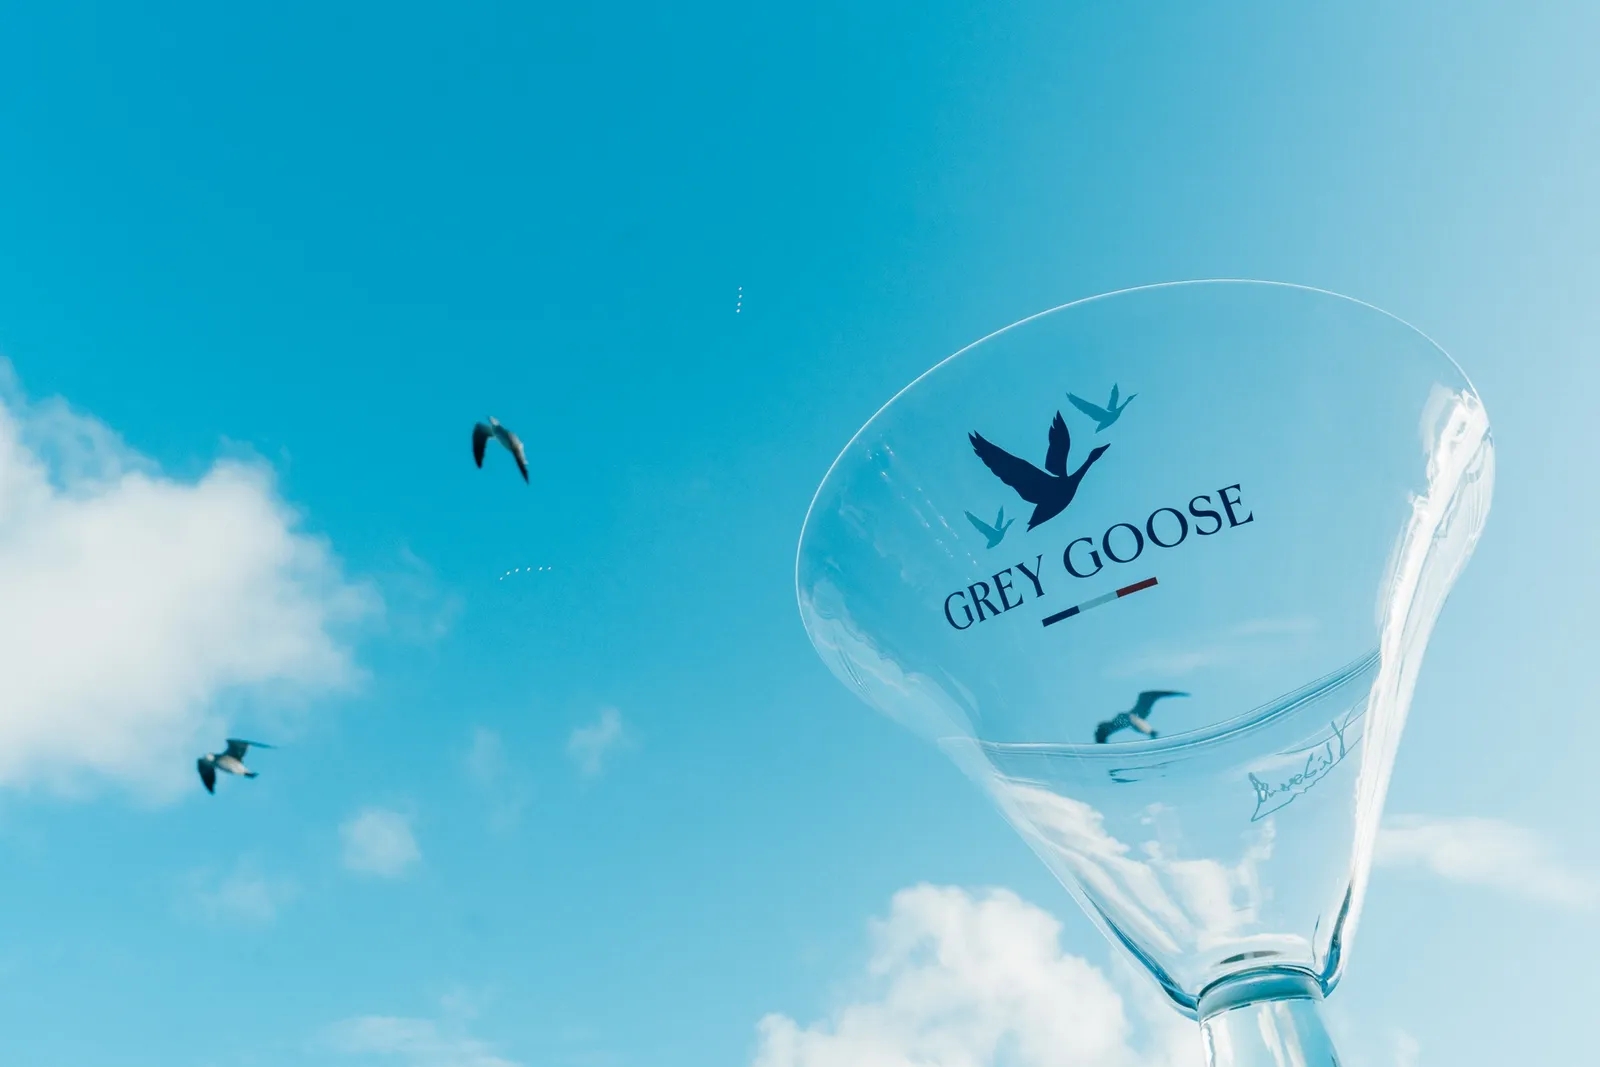 Grey Goose presents Bar Bleu, Art Basel 2022